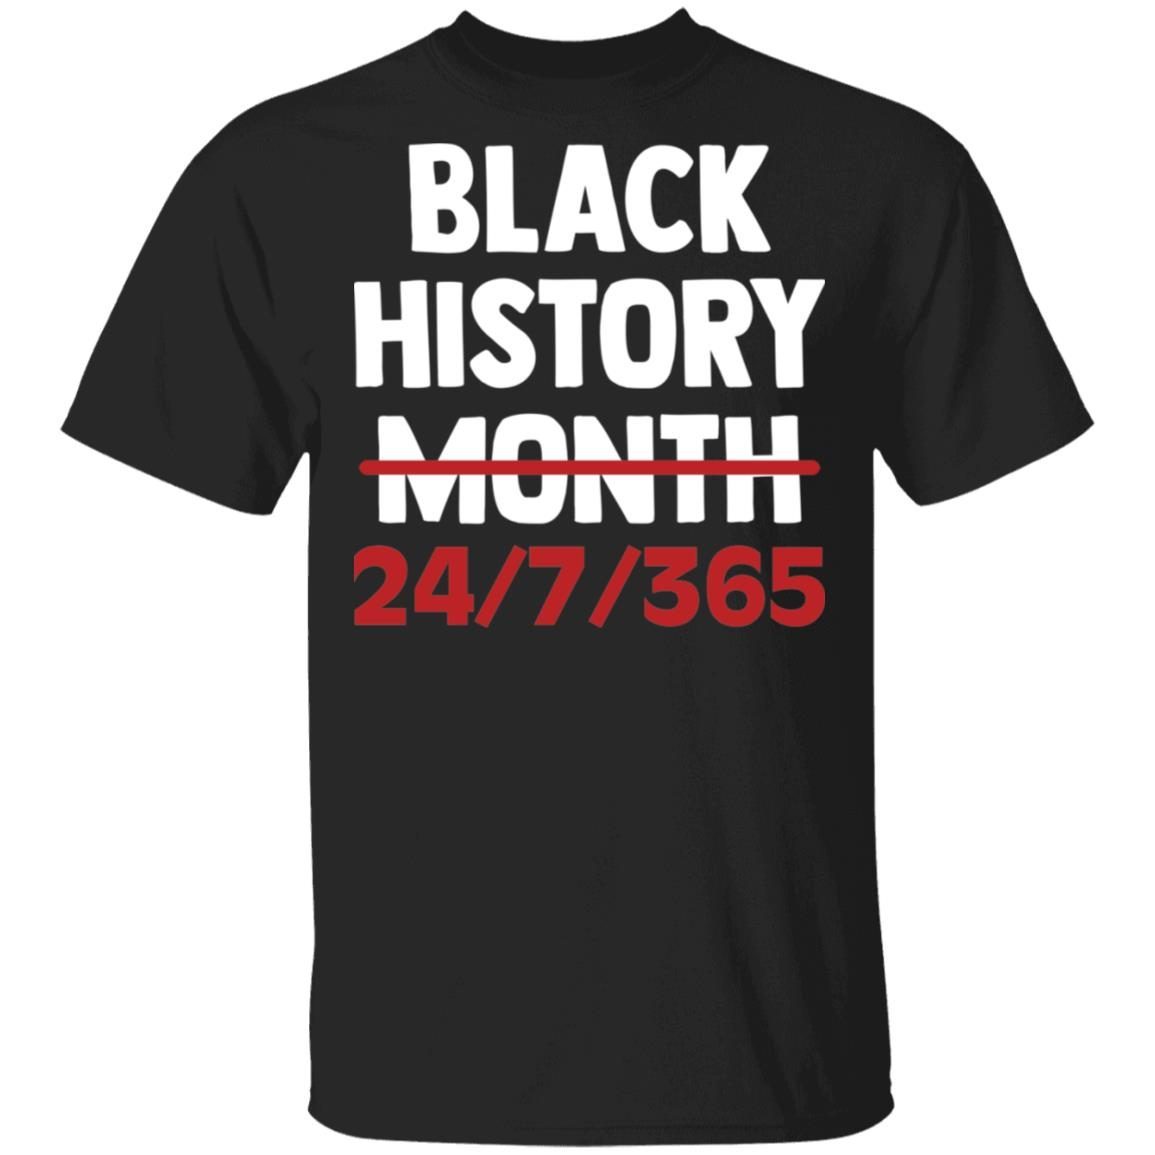 Black history month 24/7/365 shirt 1